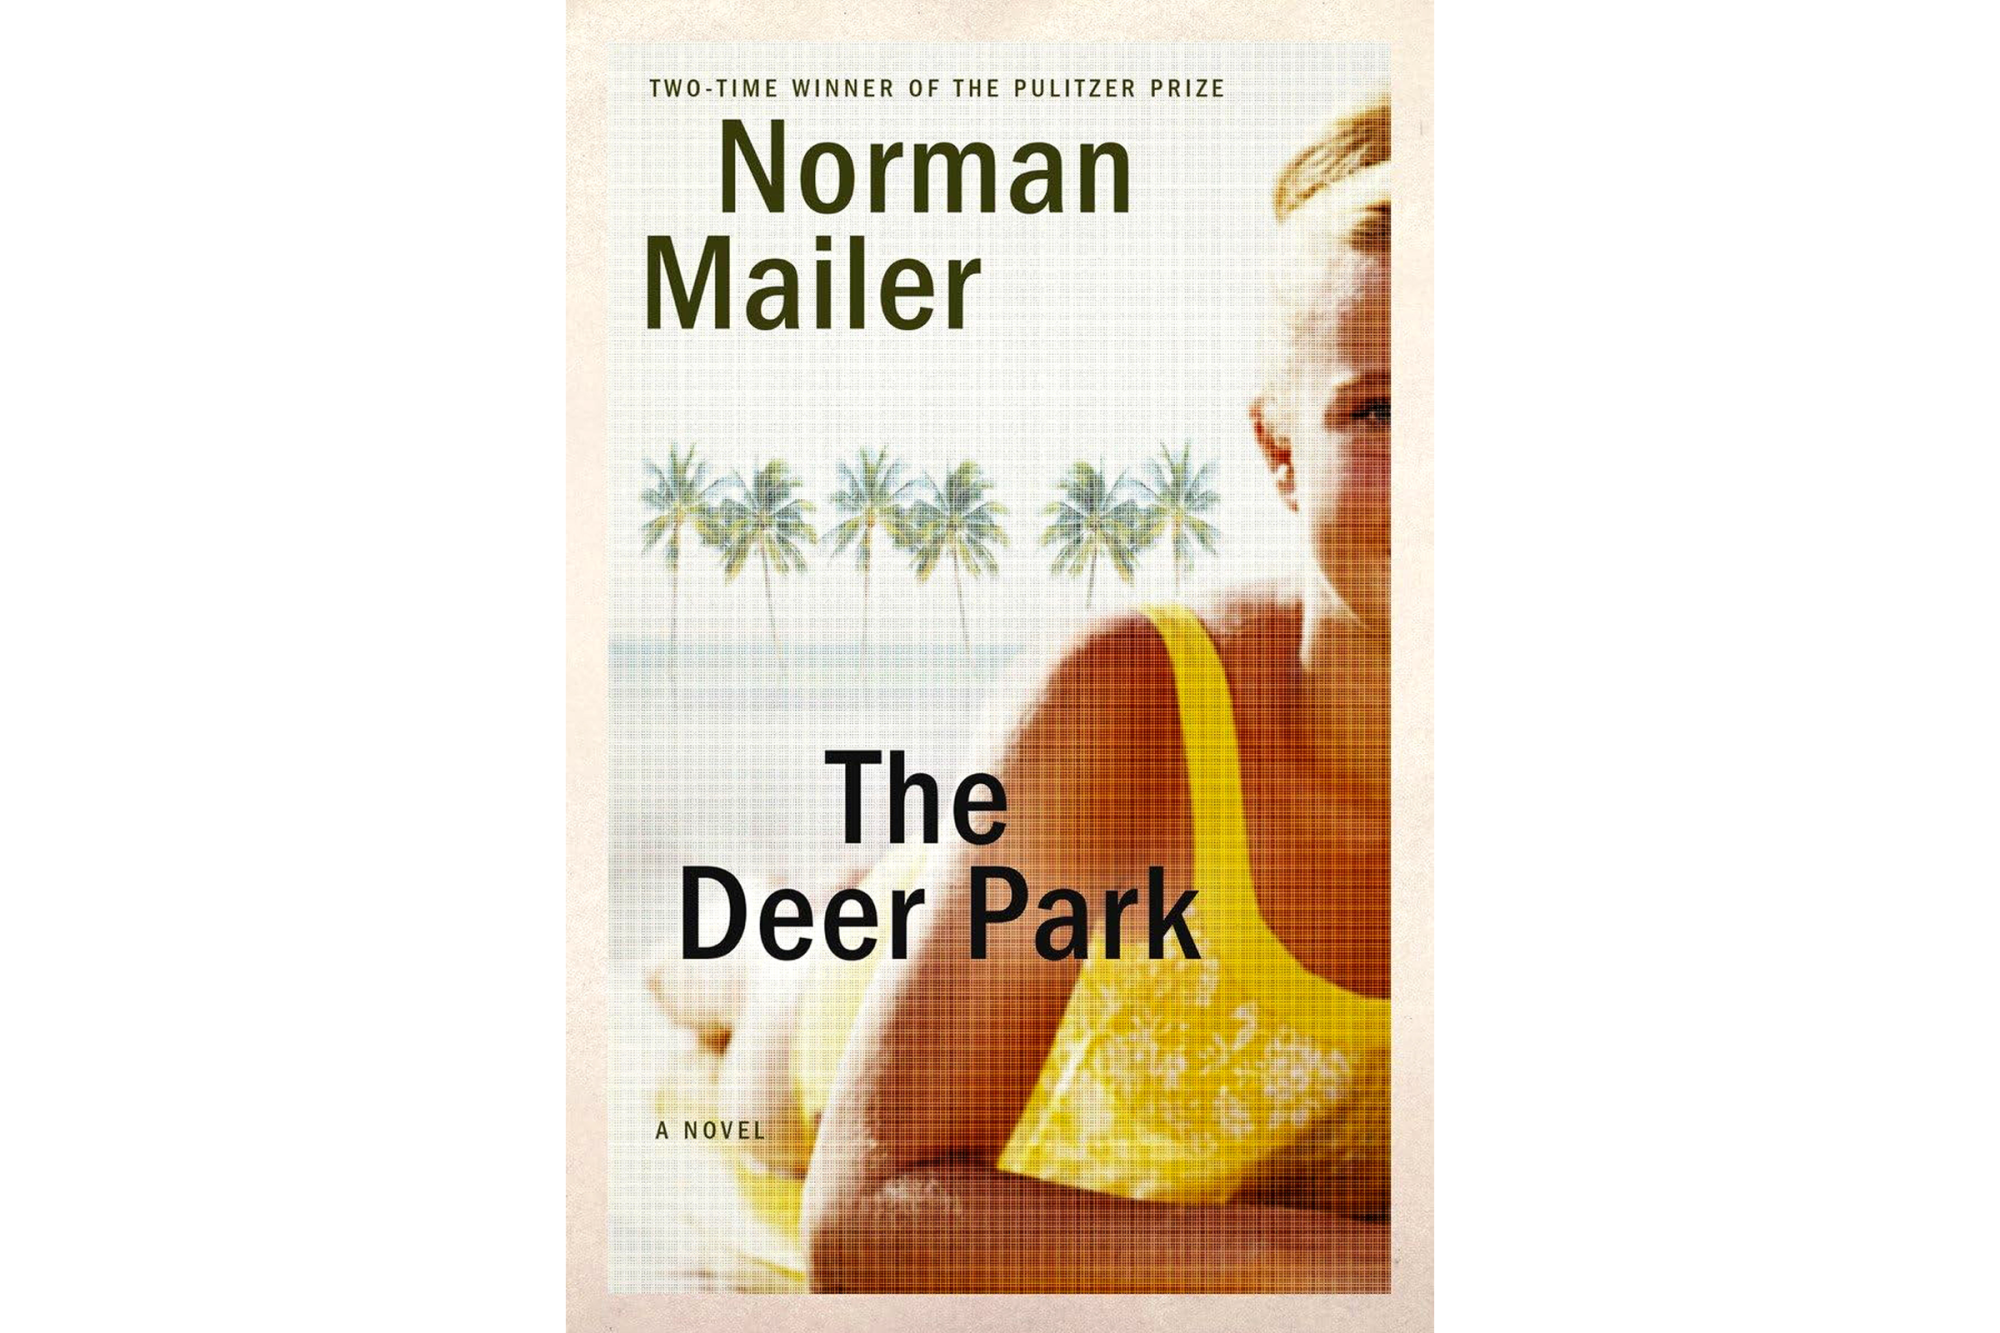 "The Deer Park: A Novel" by Norman Mailer